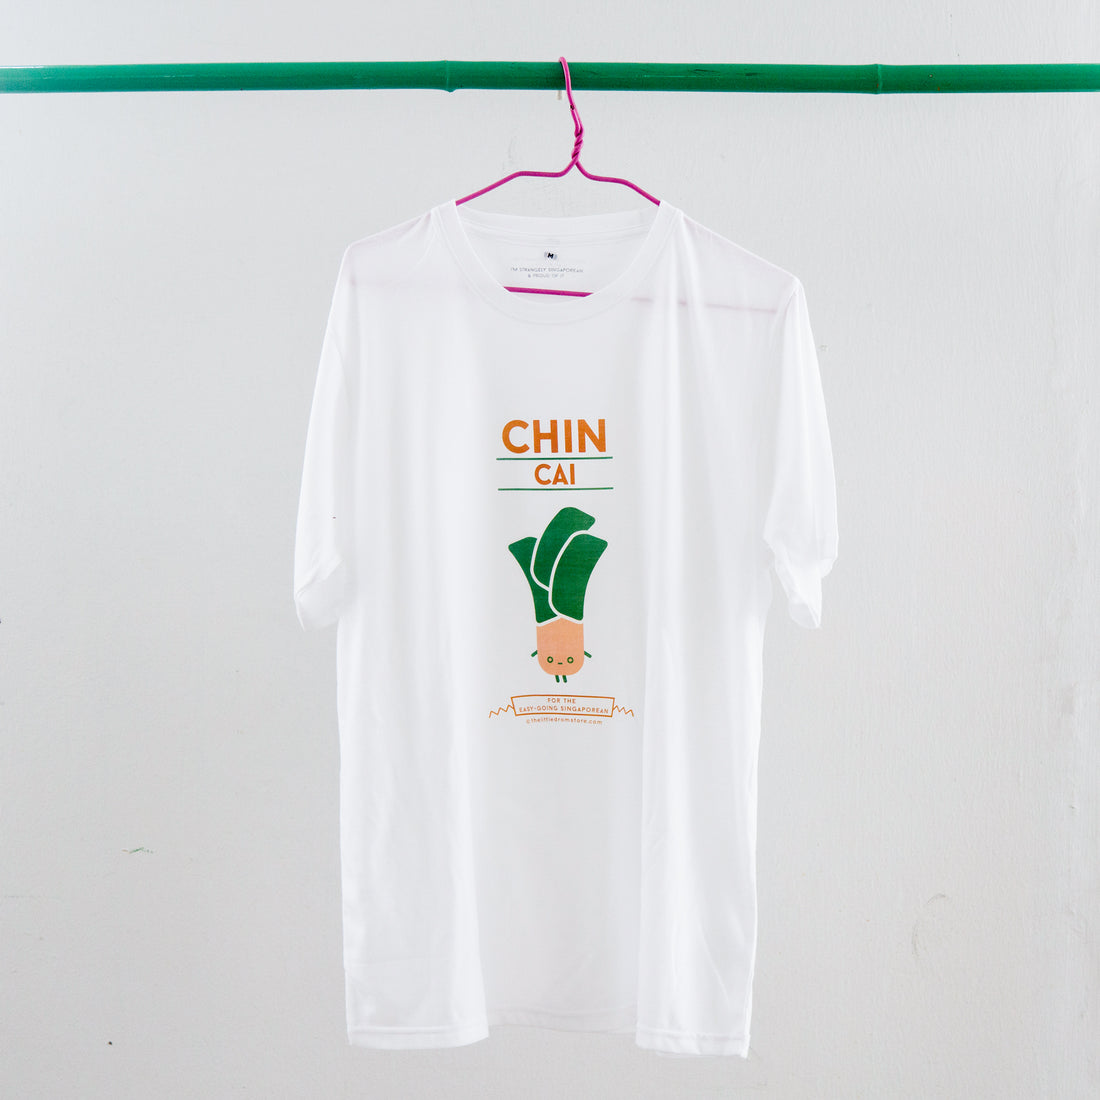 Chin Cai T-Shirt